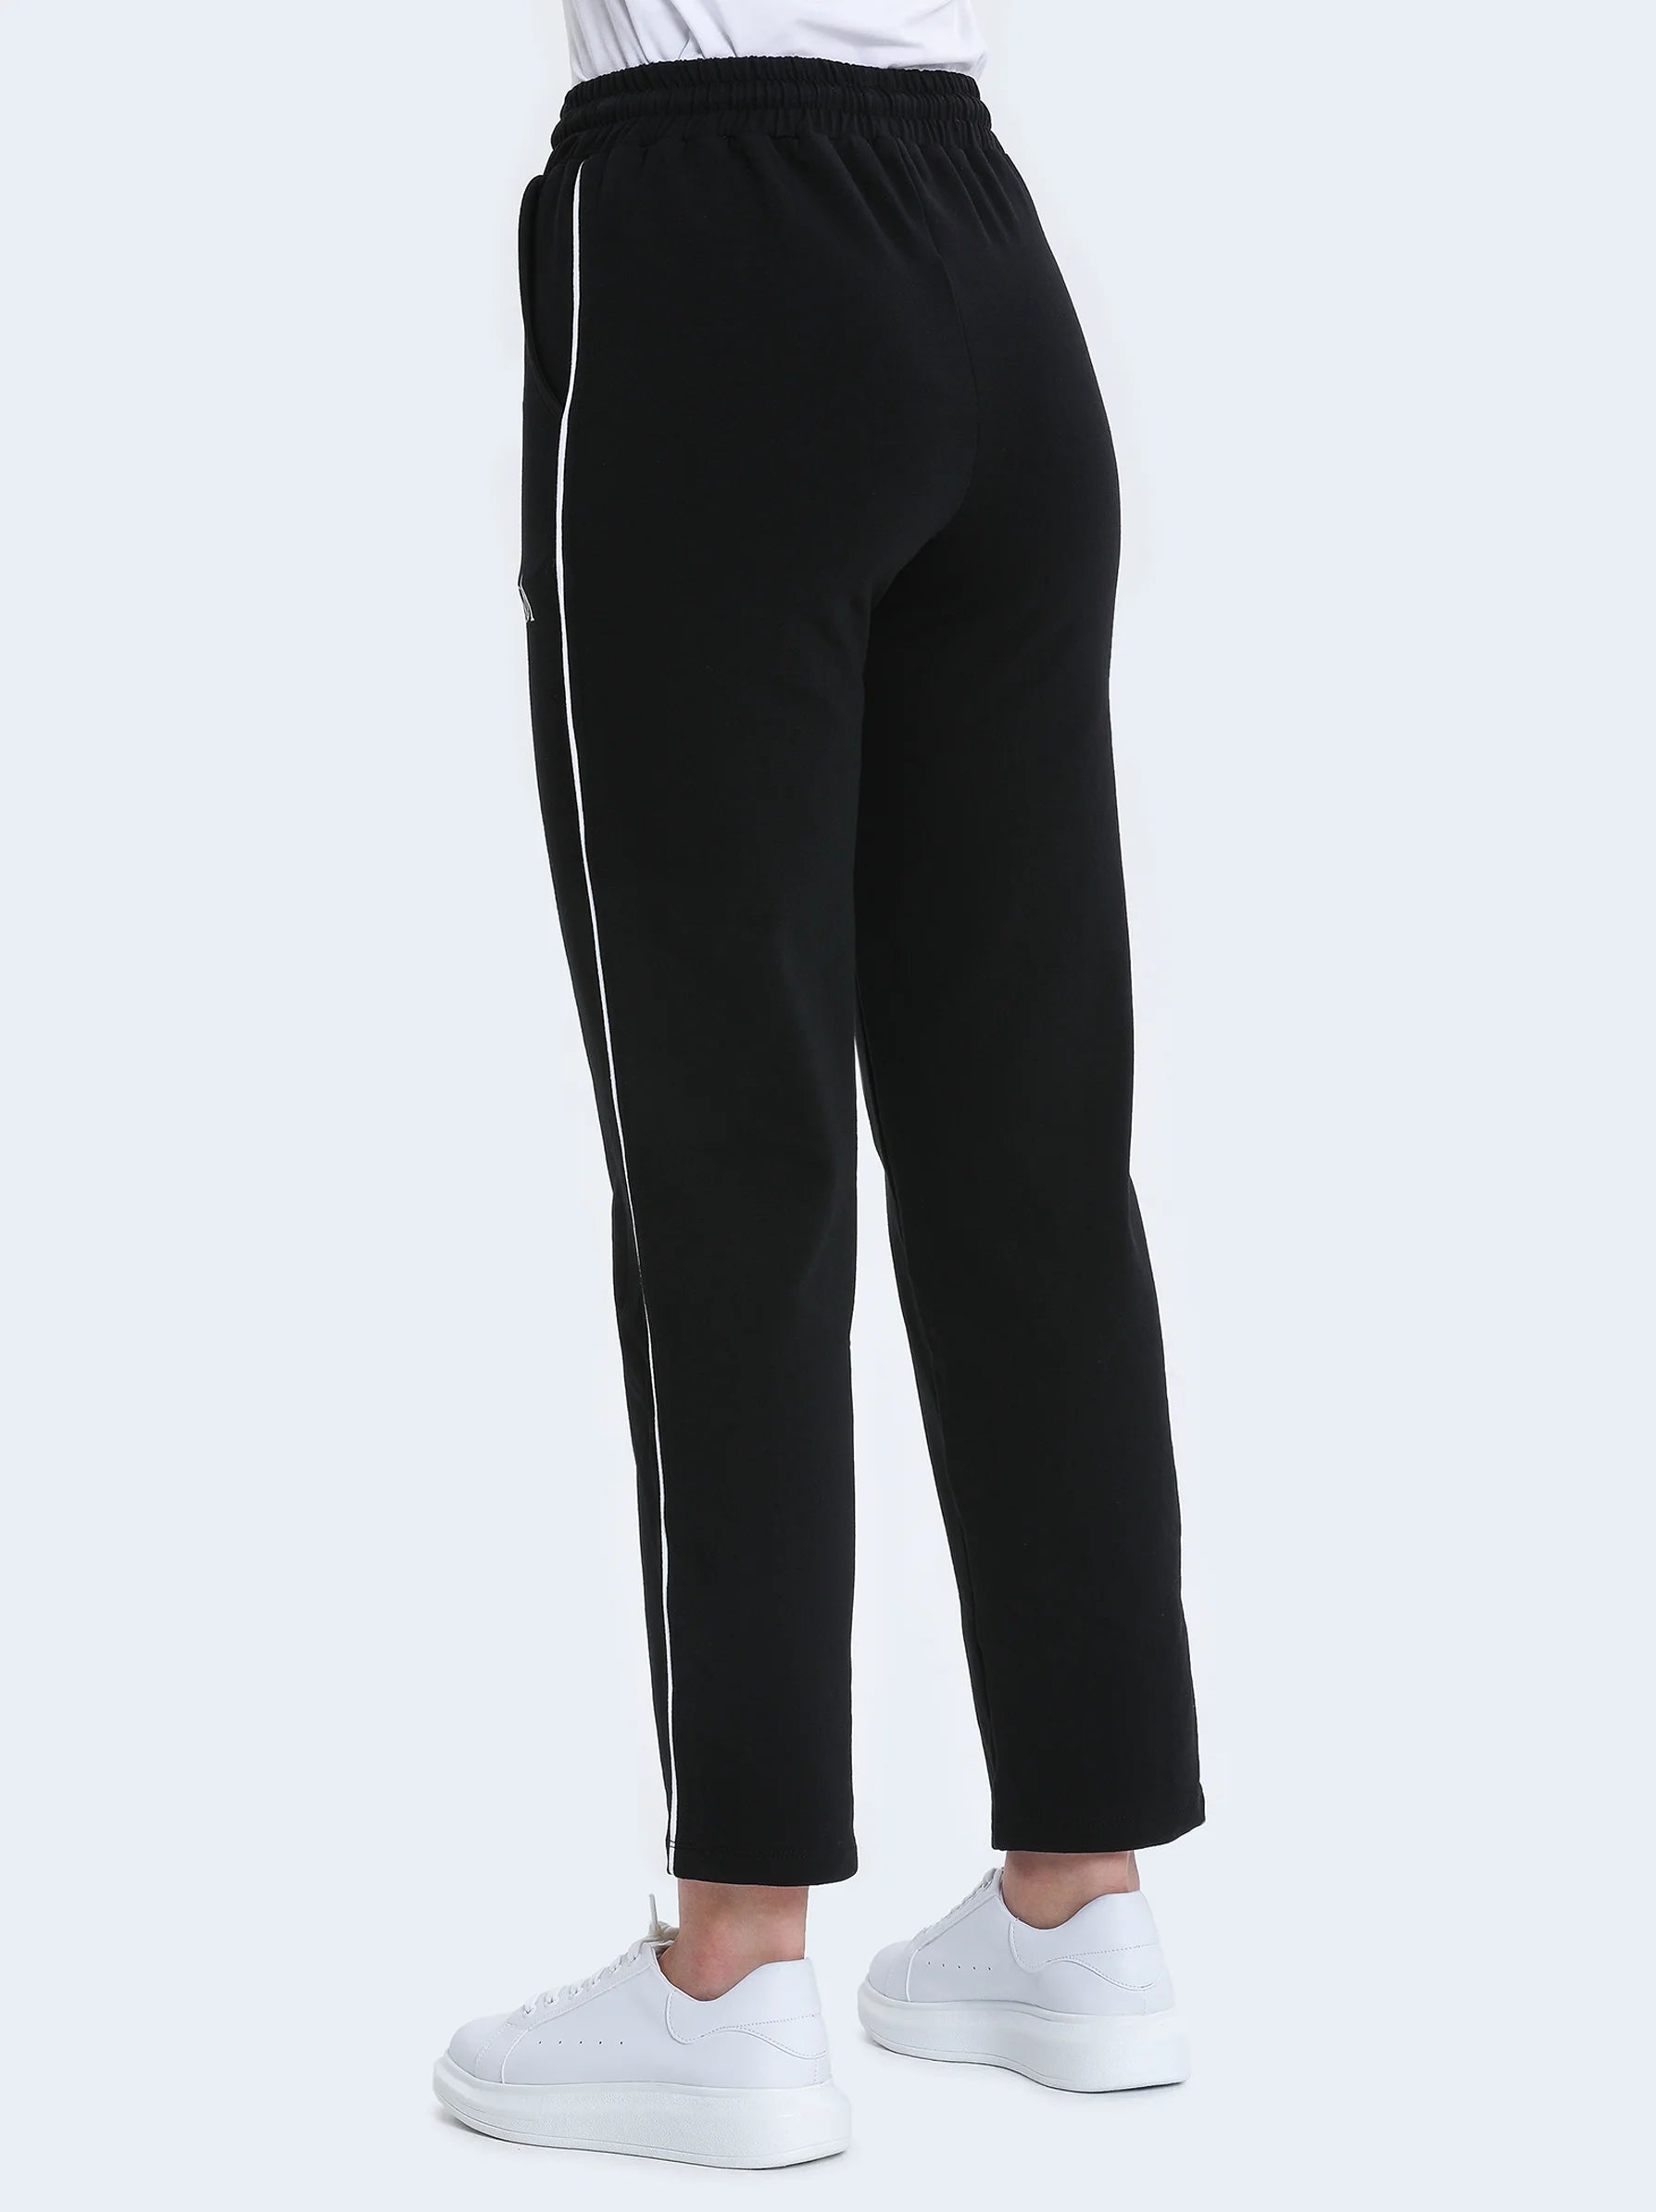 black sweatpants for ladies